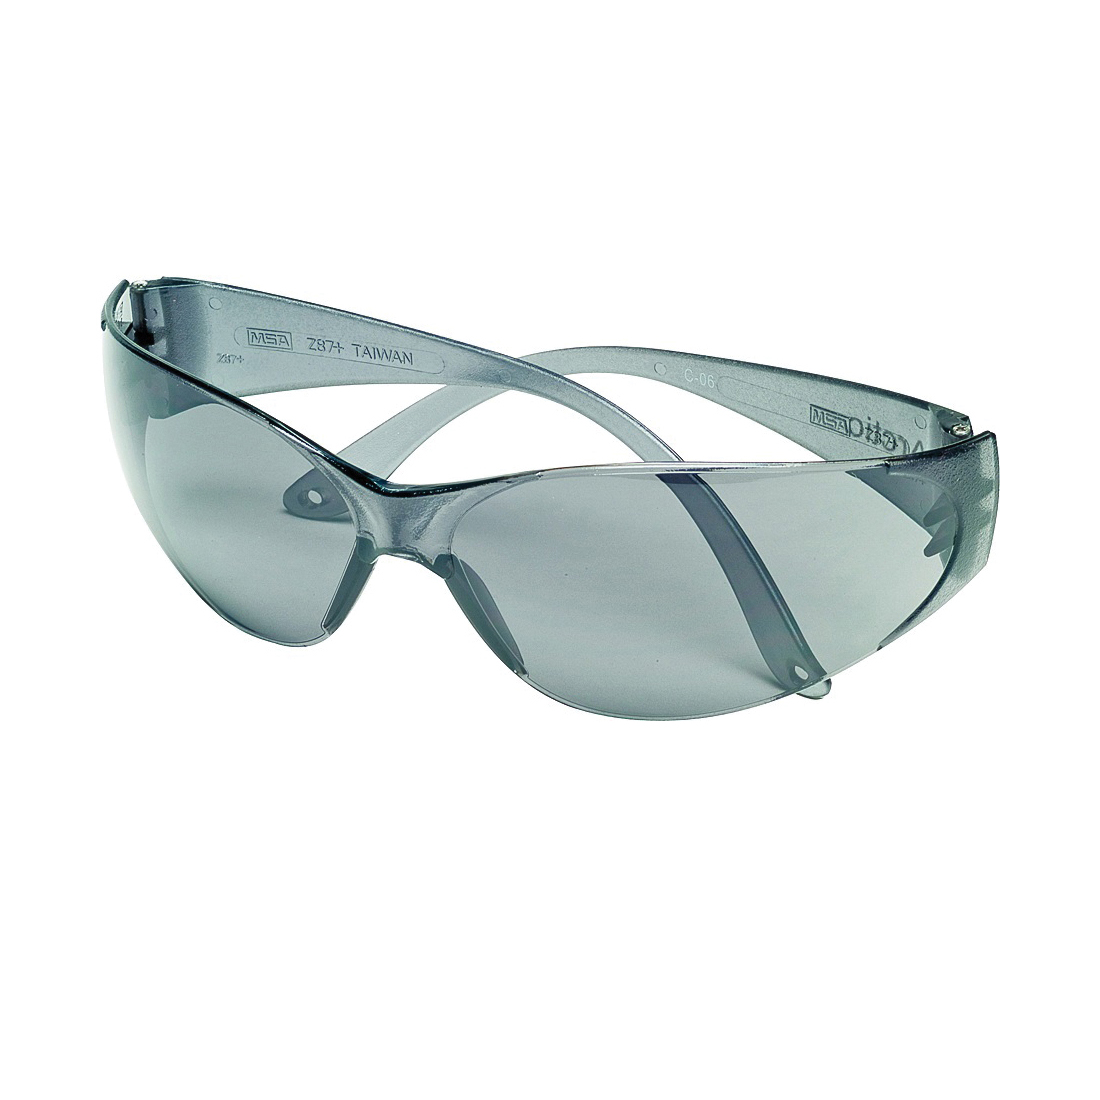 697515 Safety Glasses, Anti-Scratch Lens, Polycarbonate Lens, Wraparound Frame